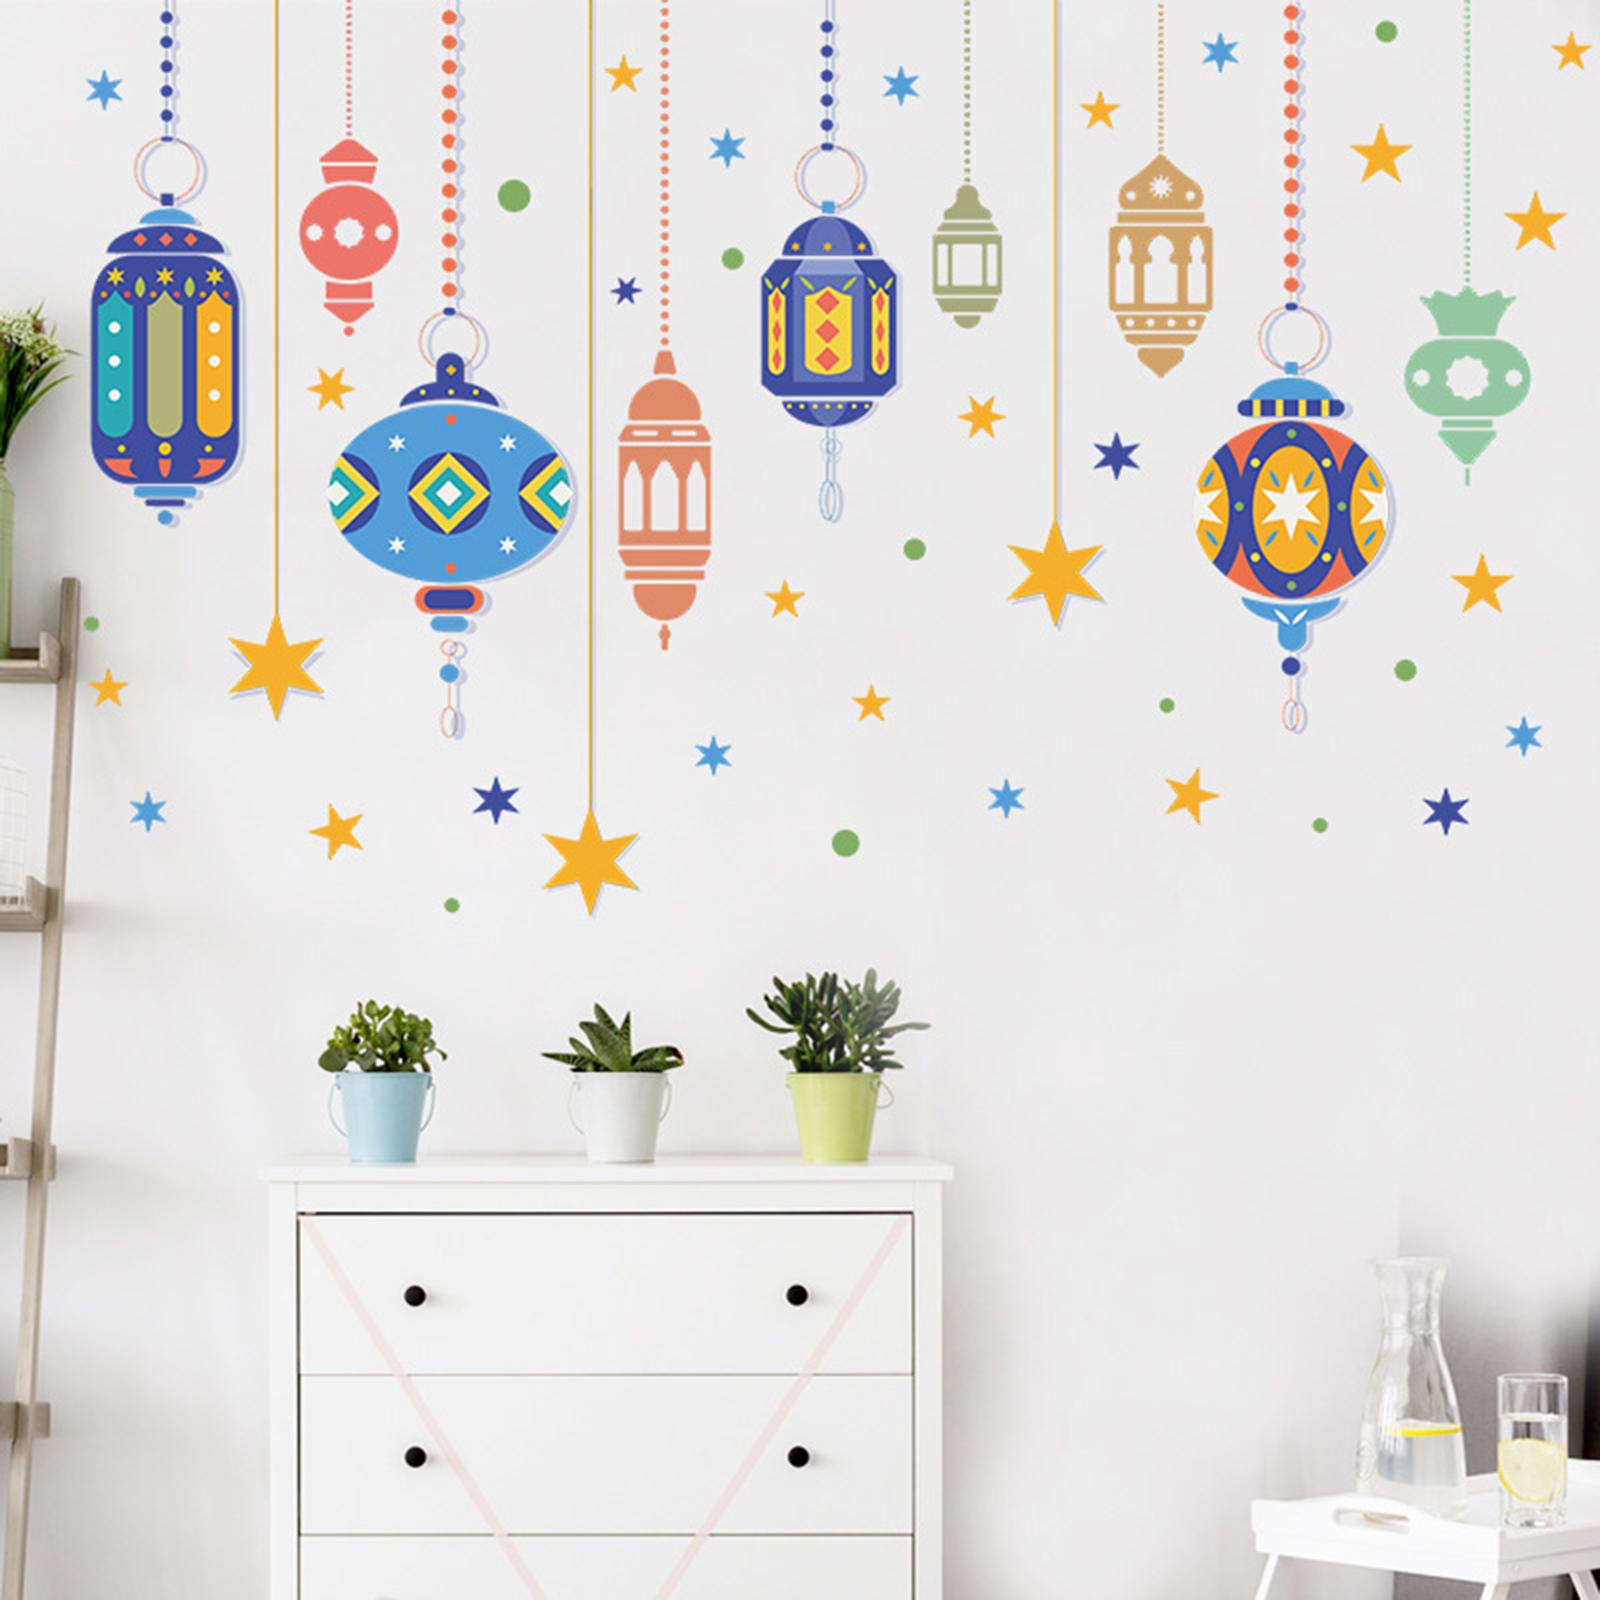 Muslim Ramadan Kareem Wall Stickers Decals PVC Material for Living Room